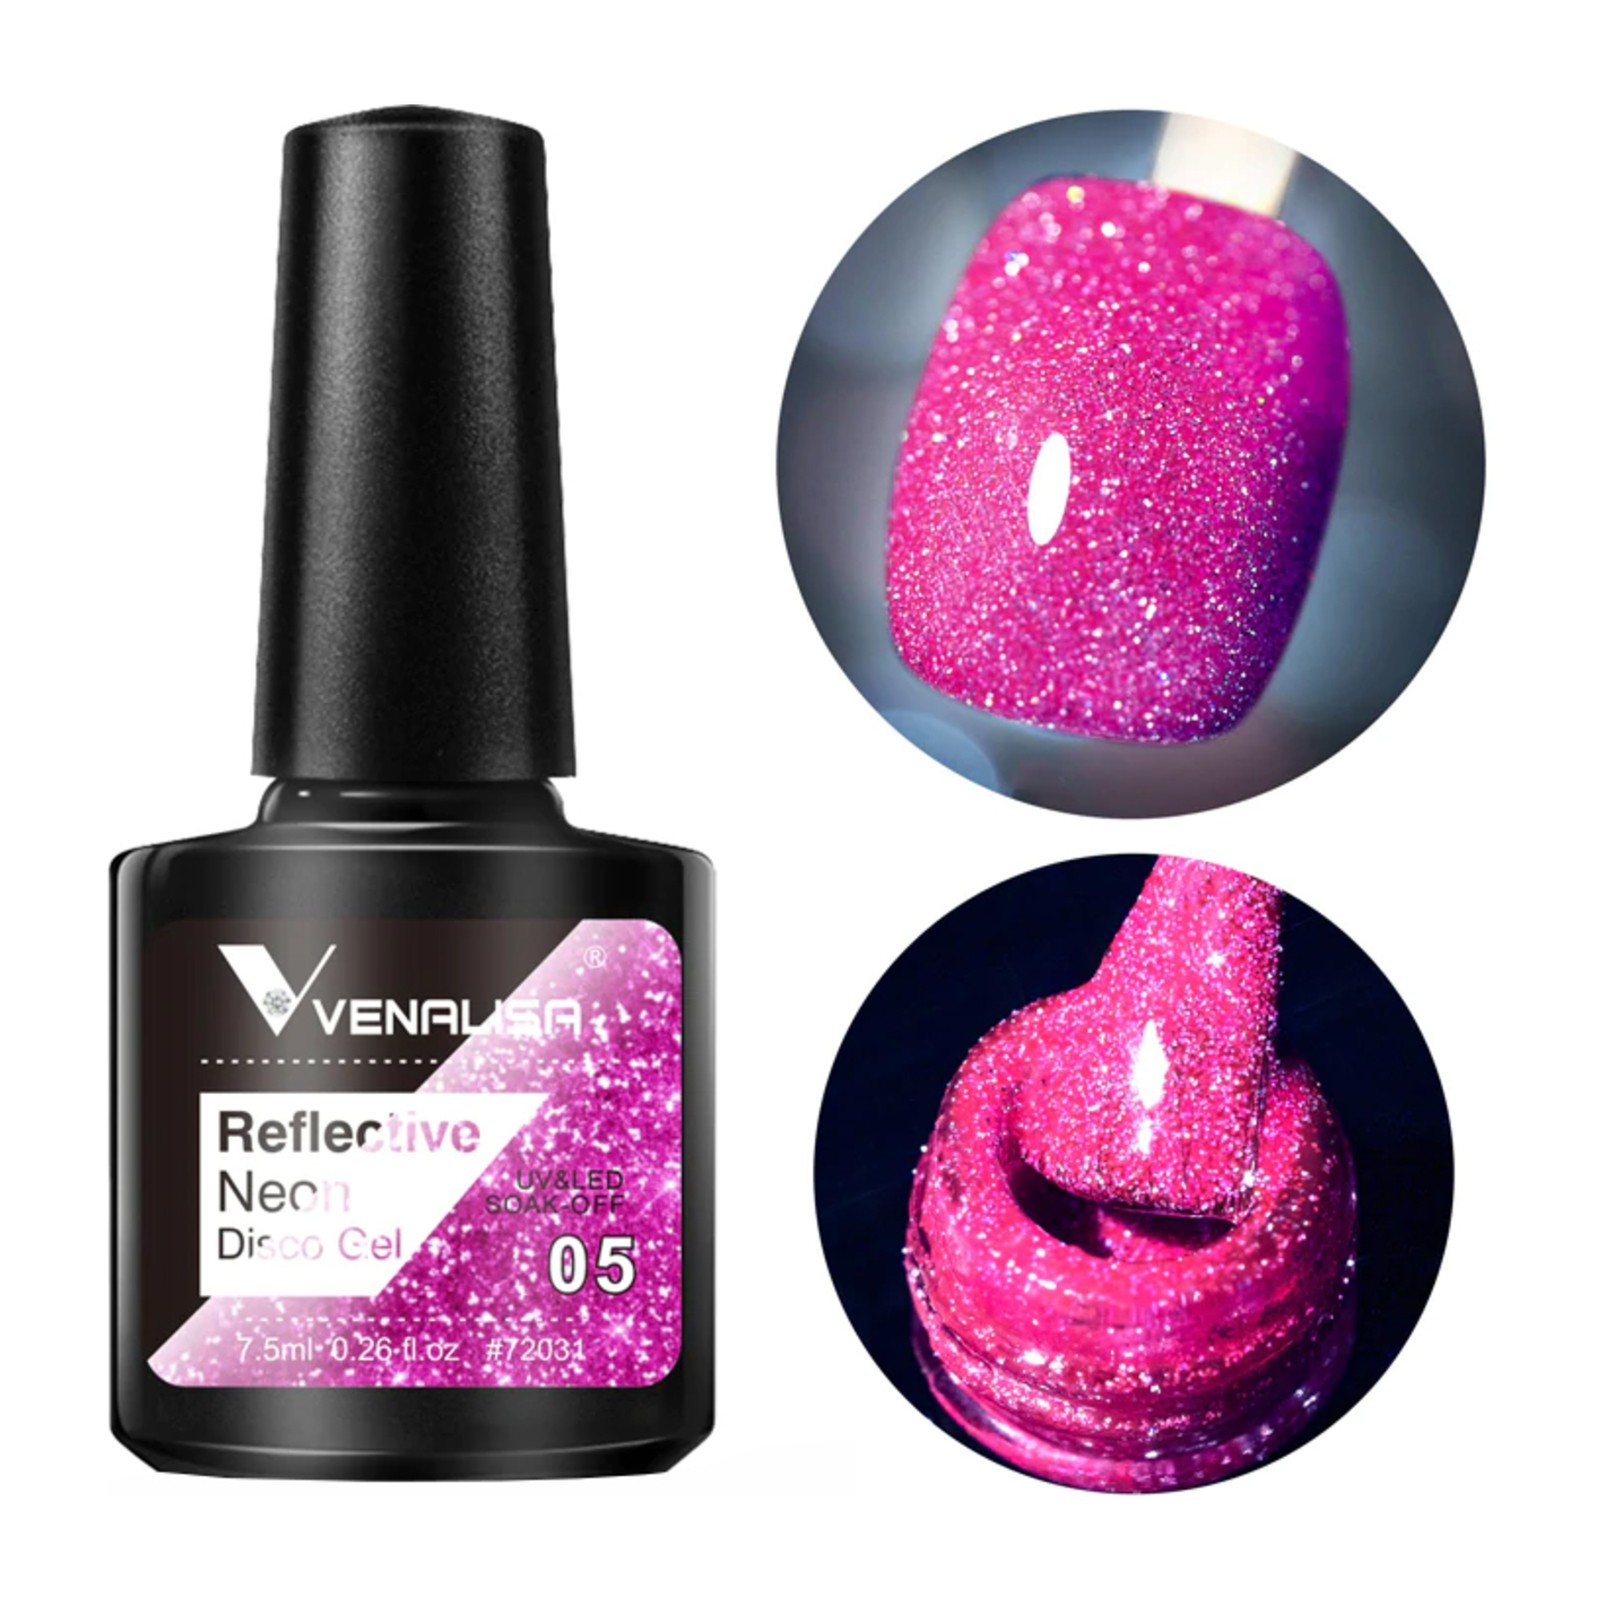 Venalisa - Reflective Neon Disco Gel - BD05